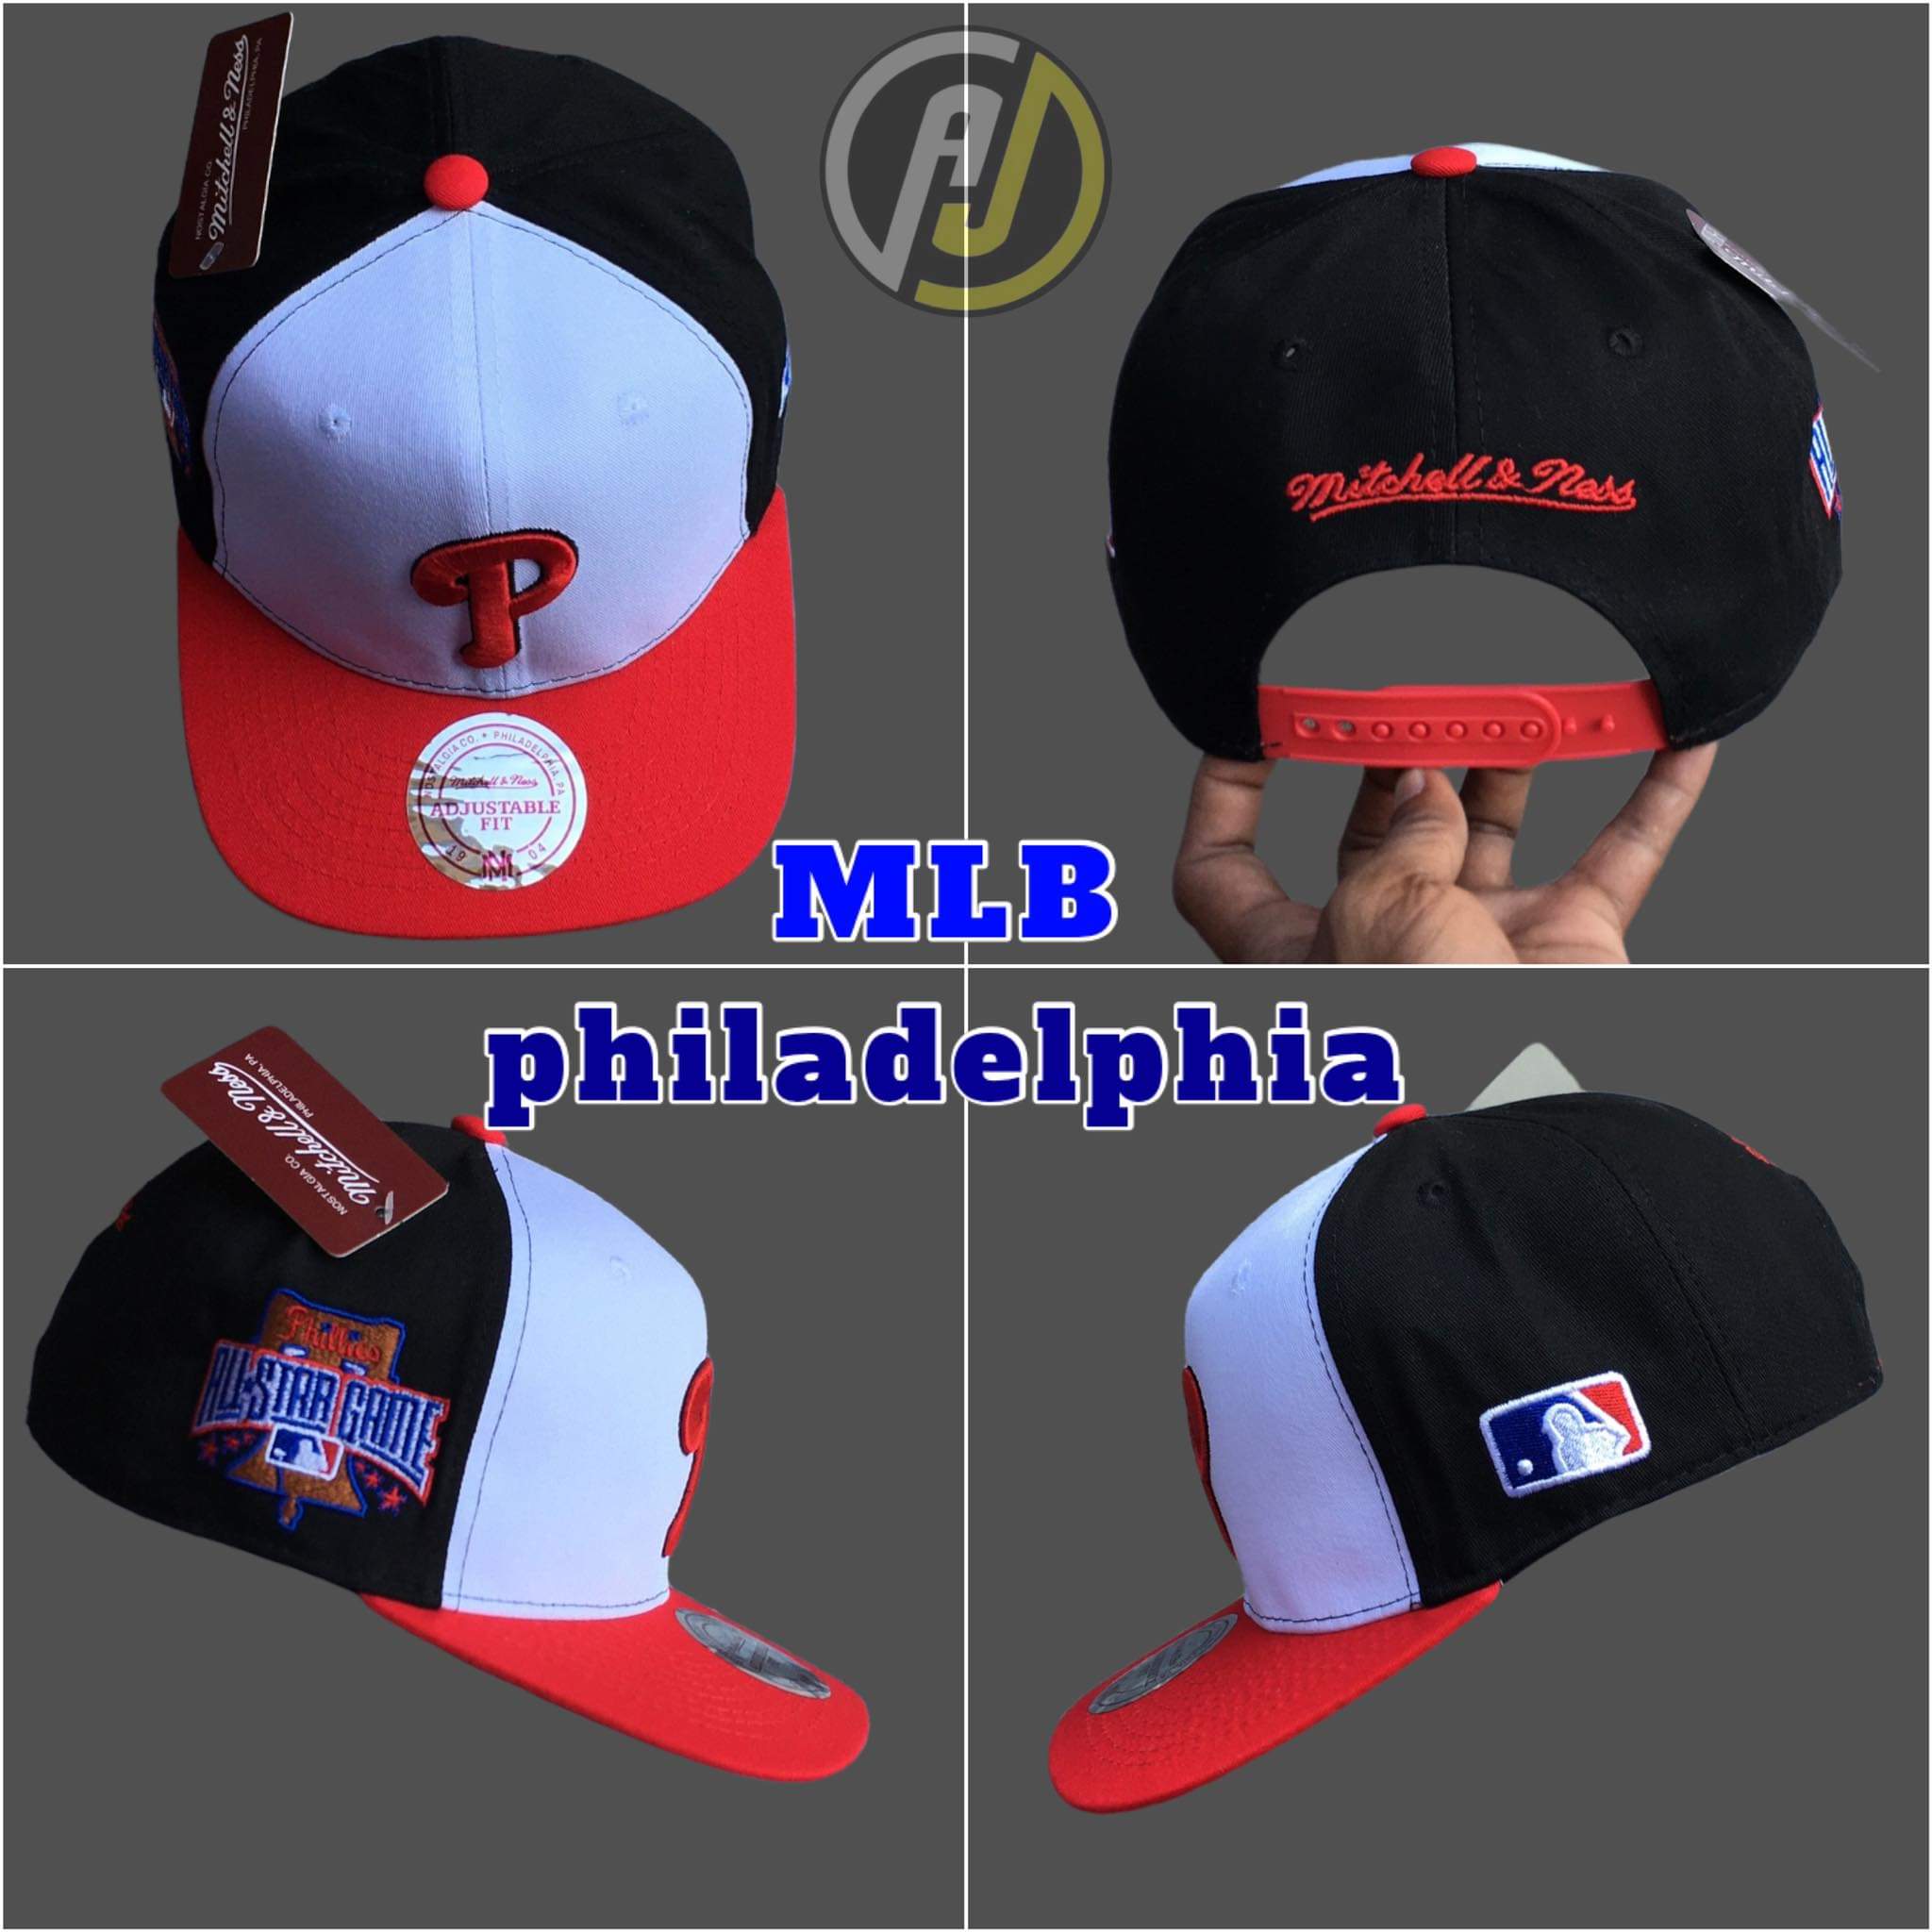 Vintage MLB San Francisco Giants Baseball Snapback Hat 